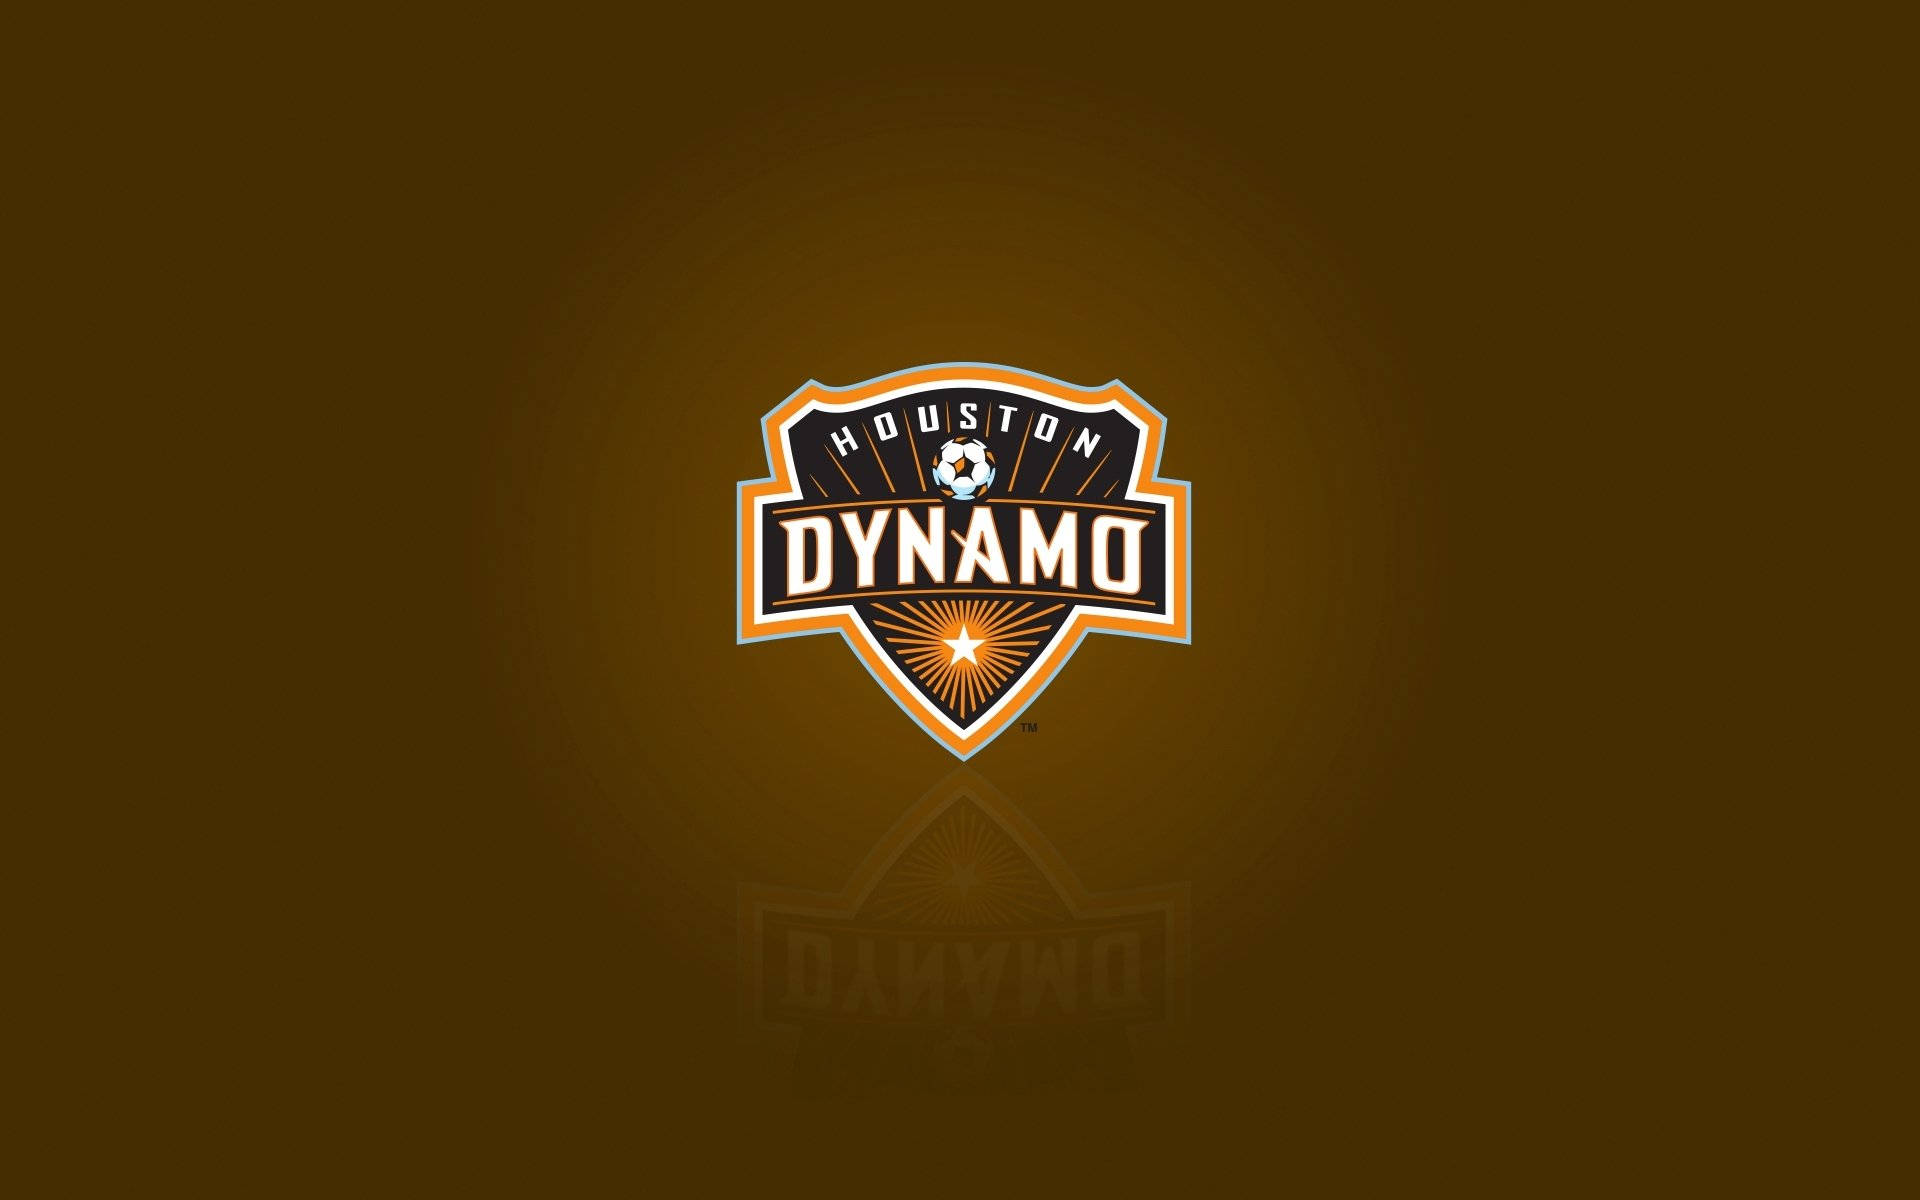 Logotipodel Equipo De Fútbol Houston Dynamo. Fondo de pantalla